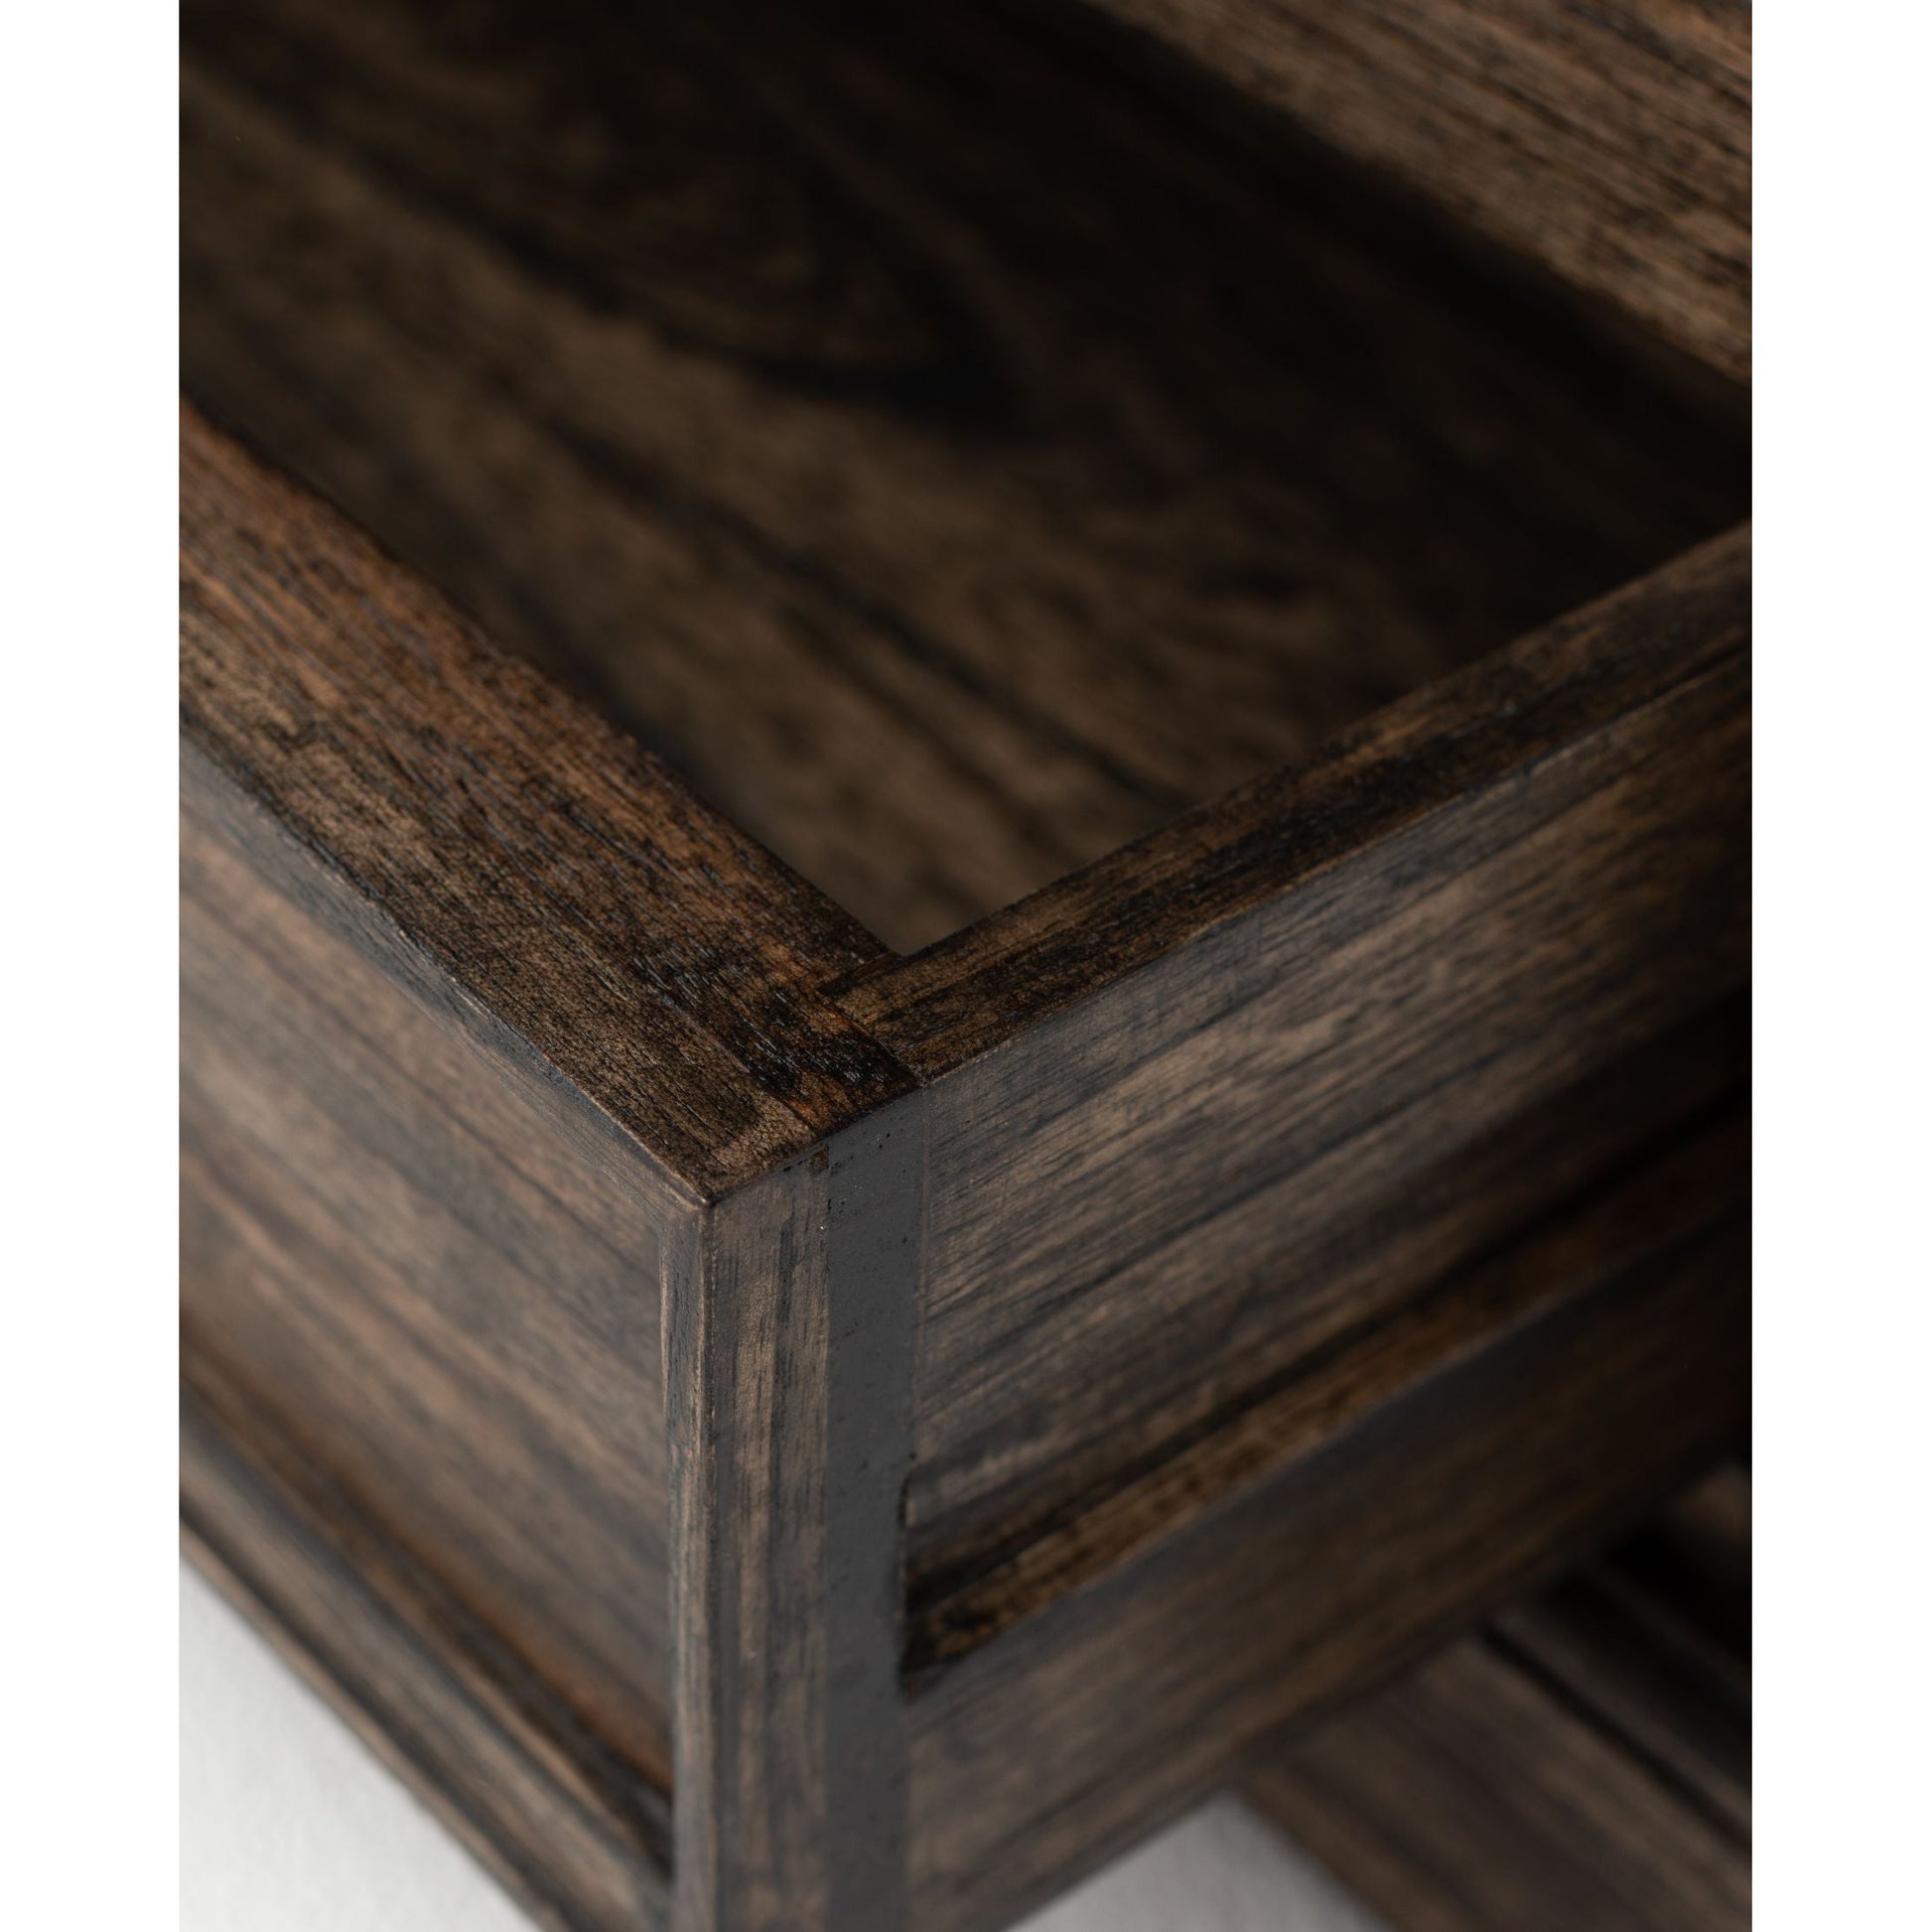 NovaSolo Halifax Mindi 32" Black Mindi Wood Display Cabinet With 4 Shelves & 1 Drawer